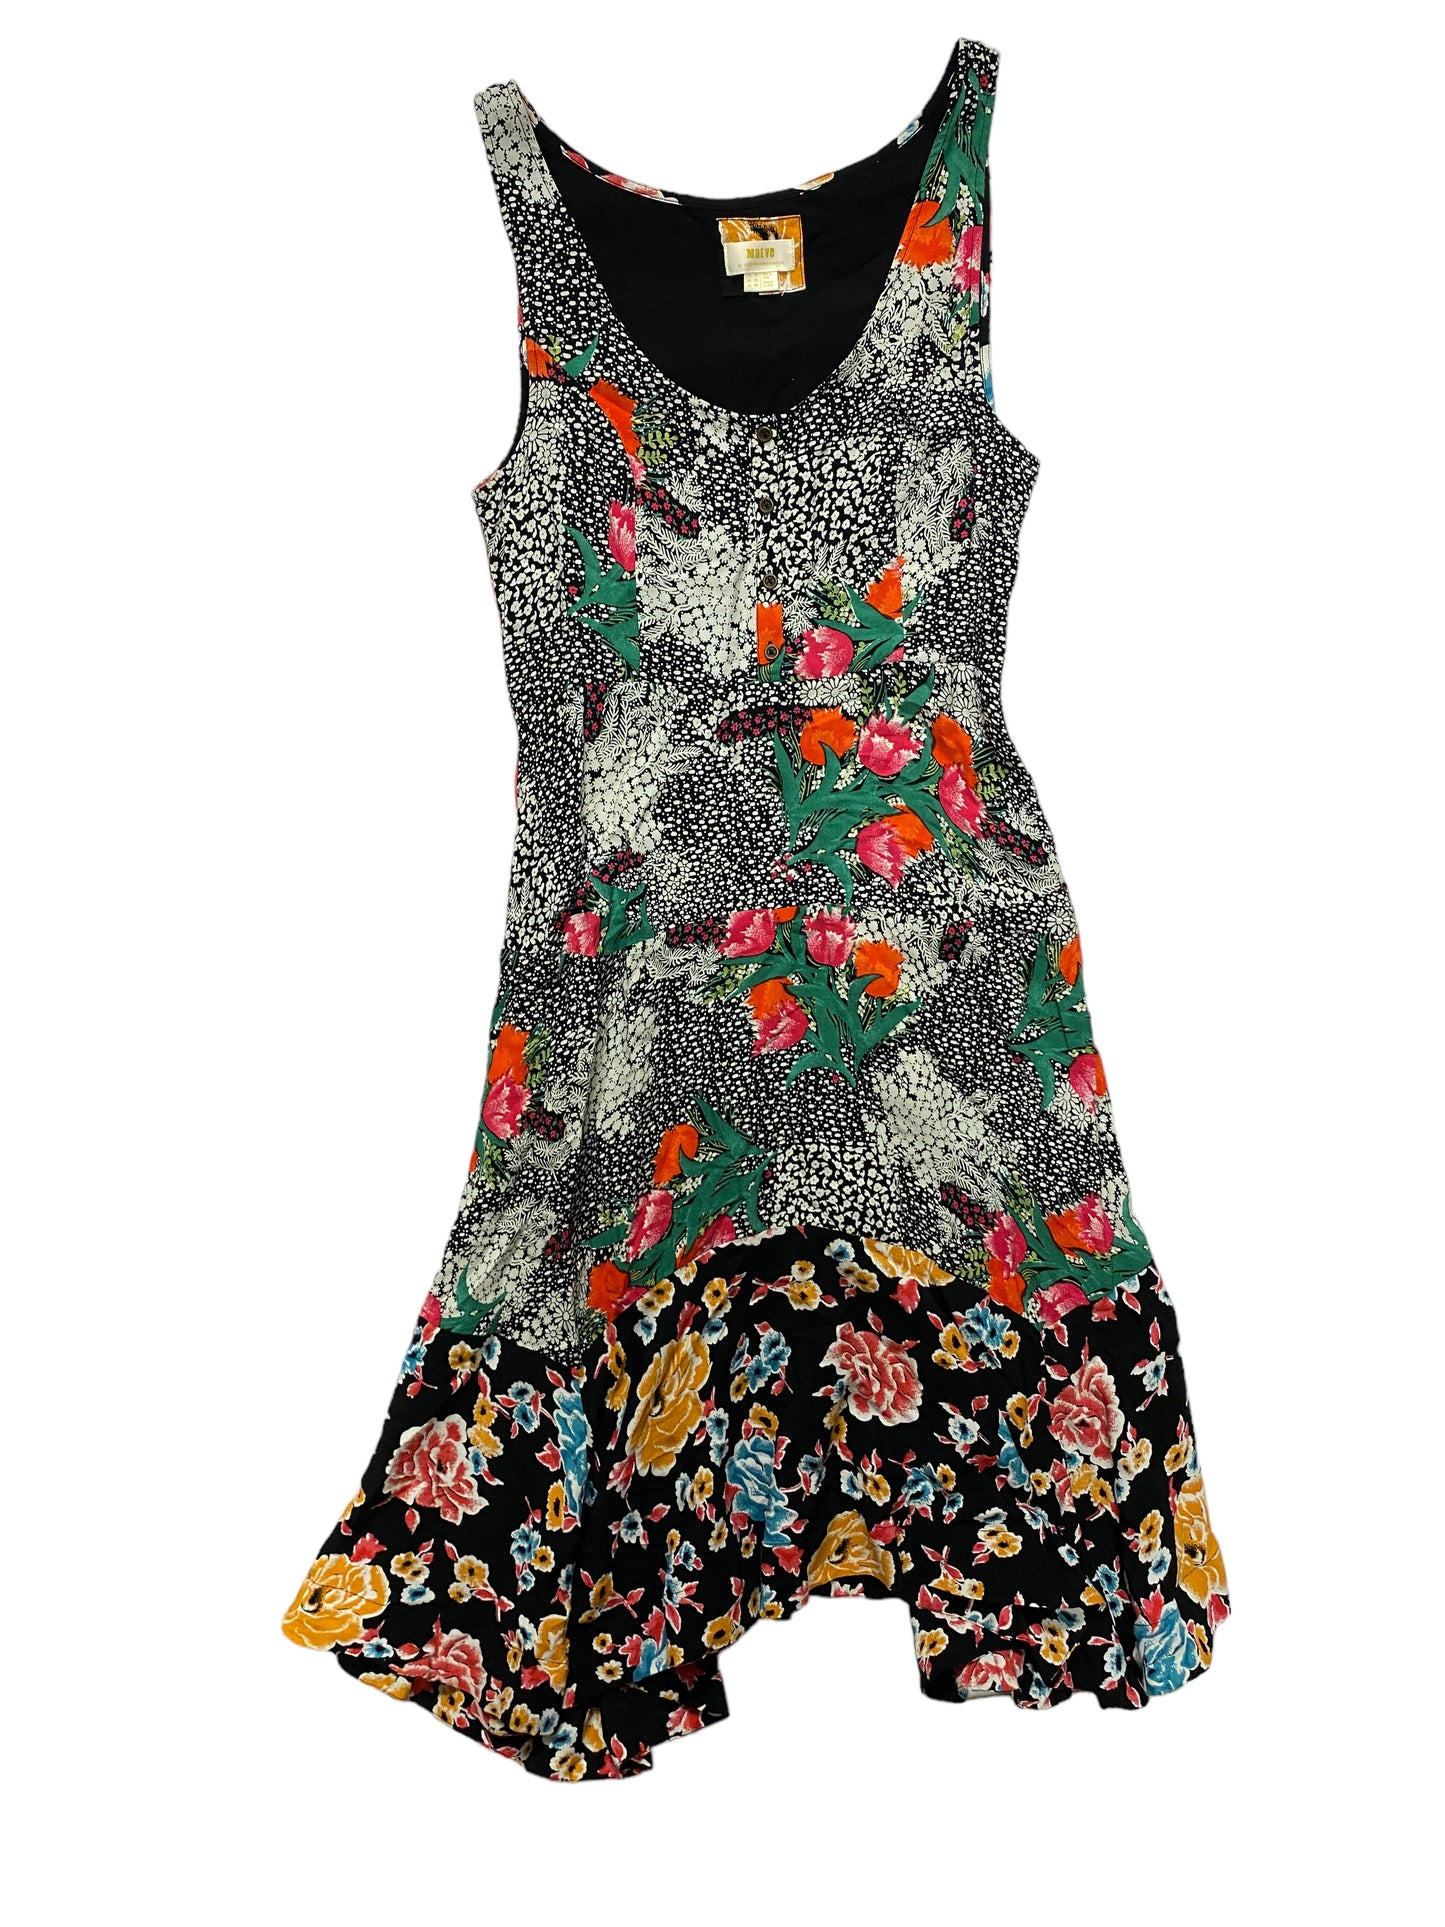 Multi-colored Dress Casual Maxi Maeve, Size 12